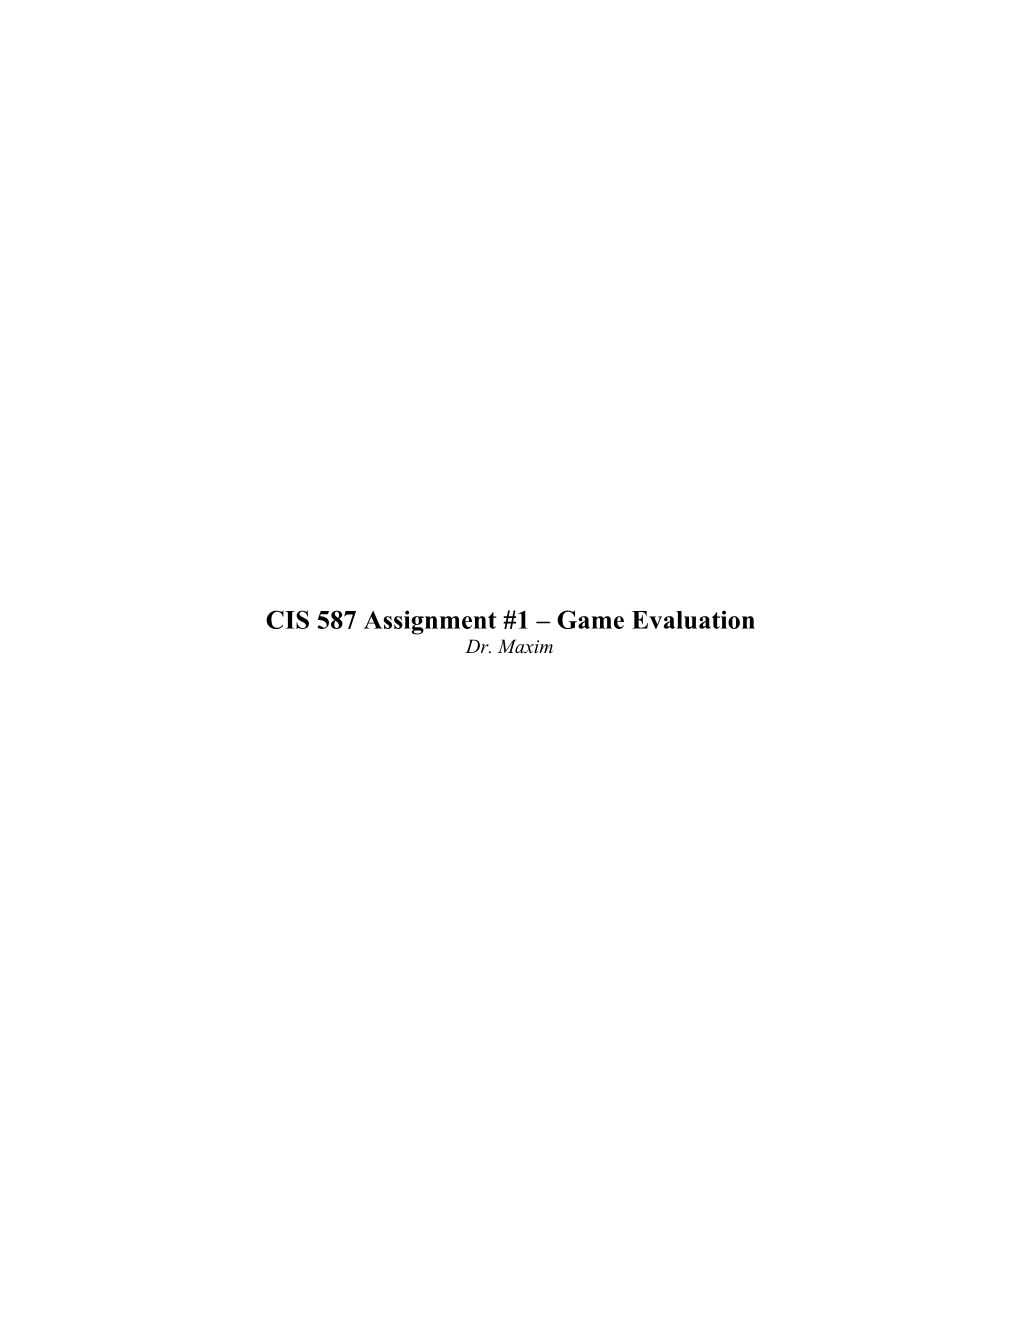 CIS 587 Assignment #1 Game Evaluation